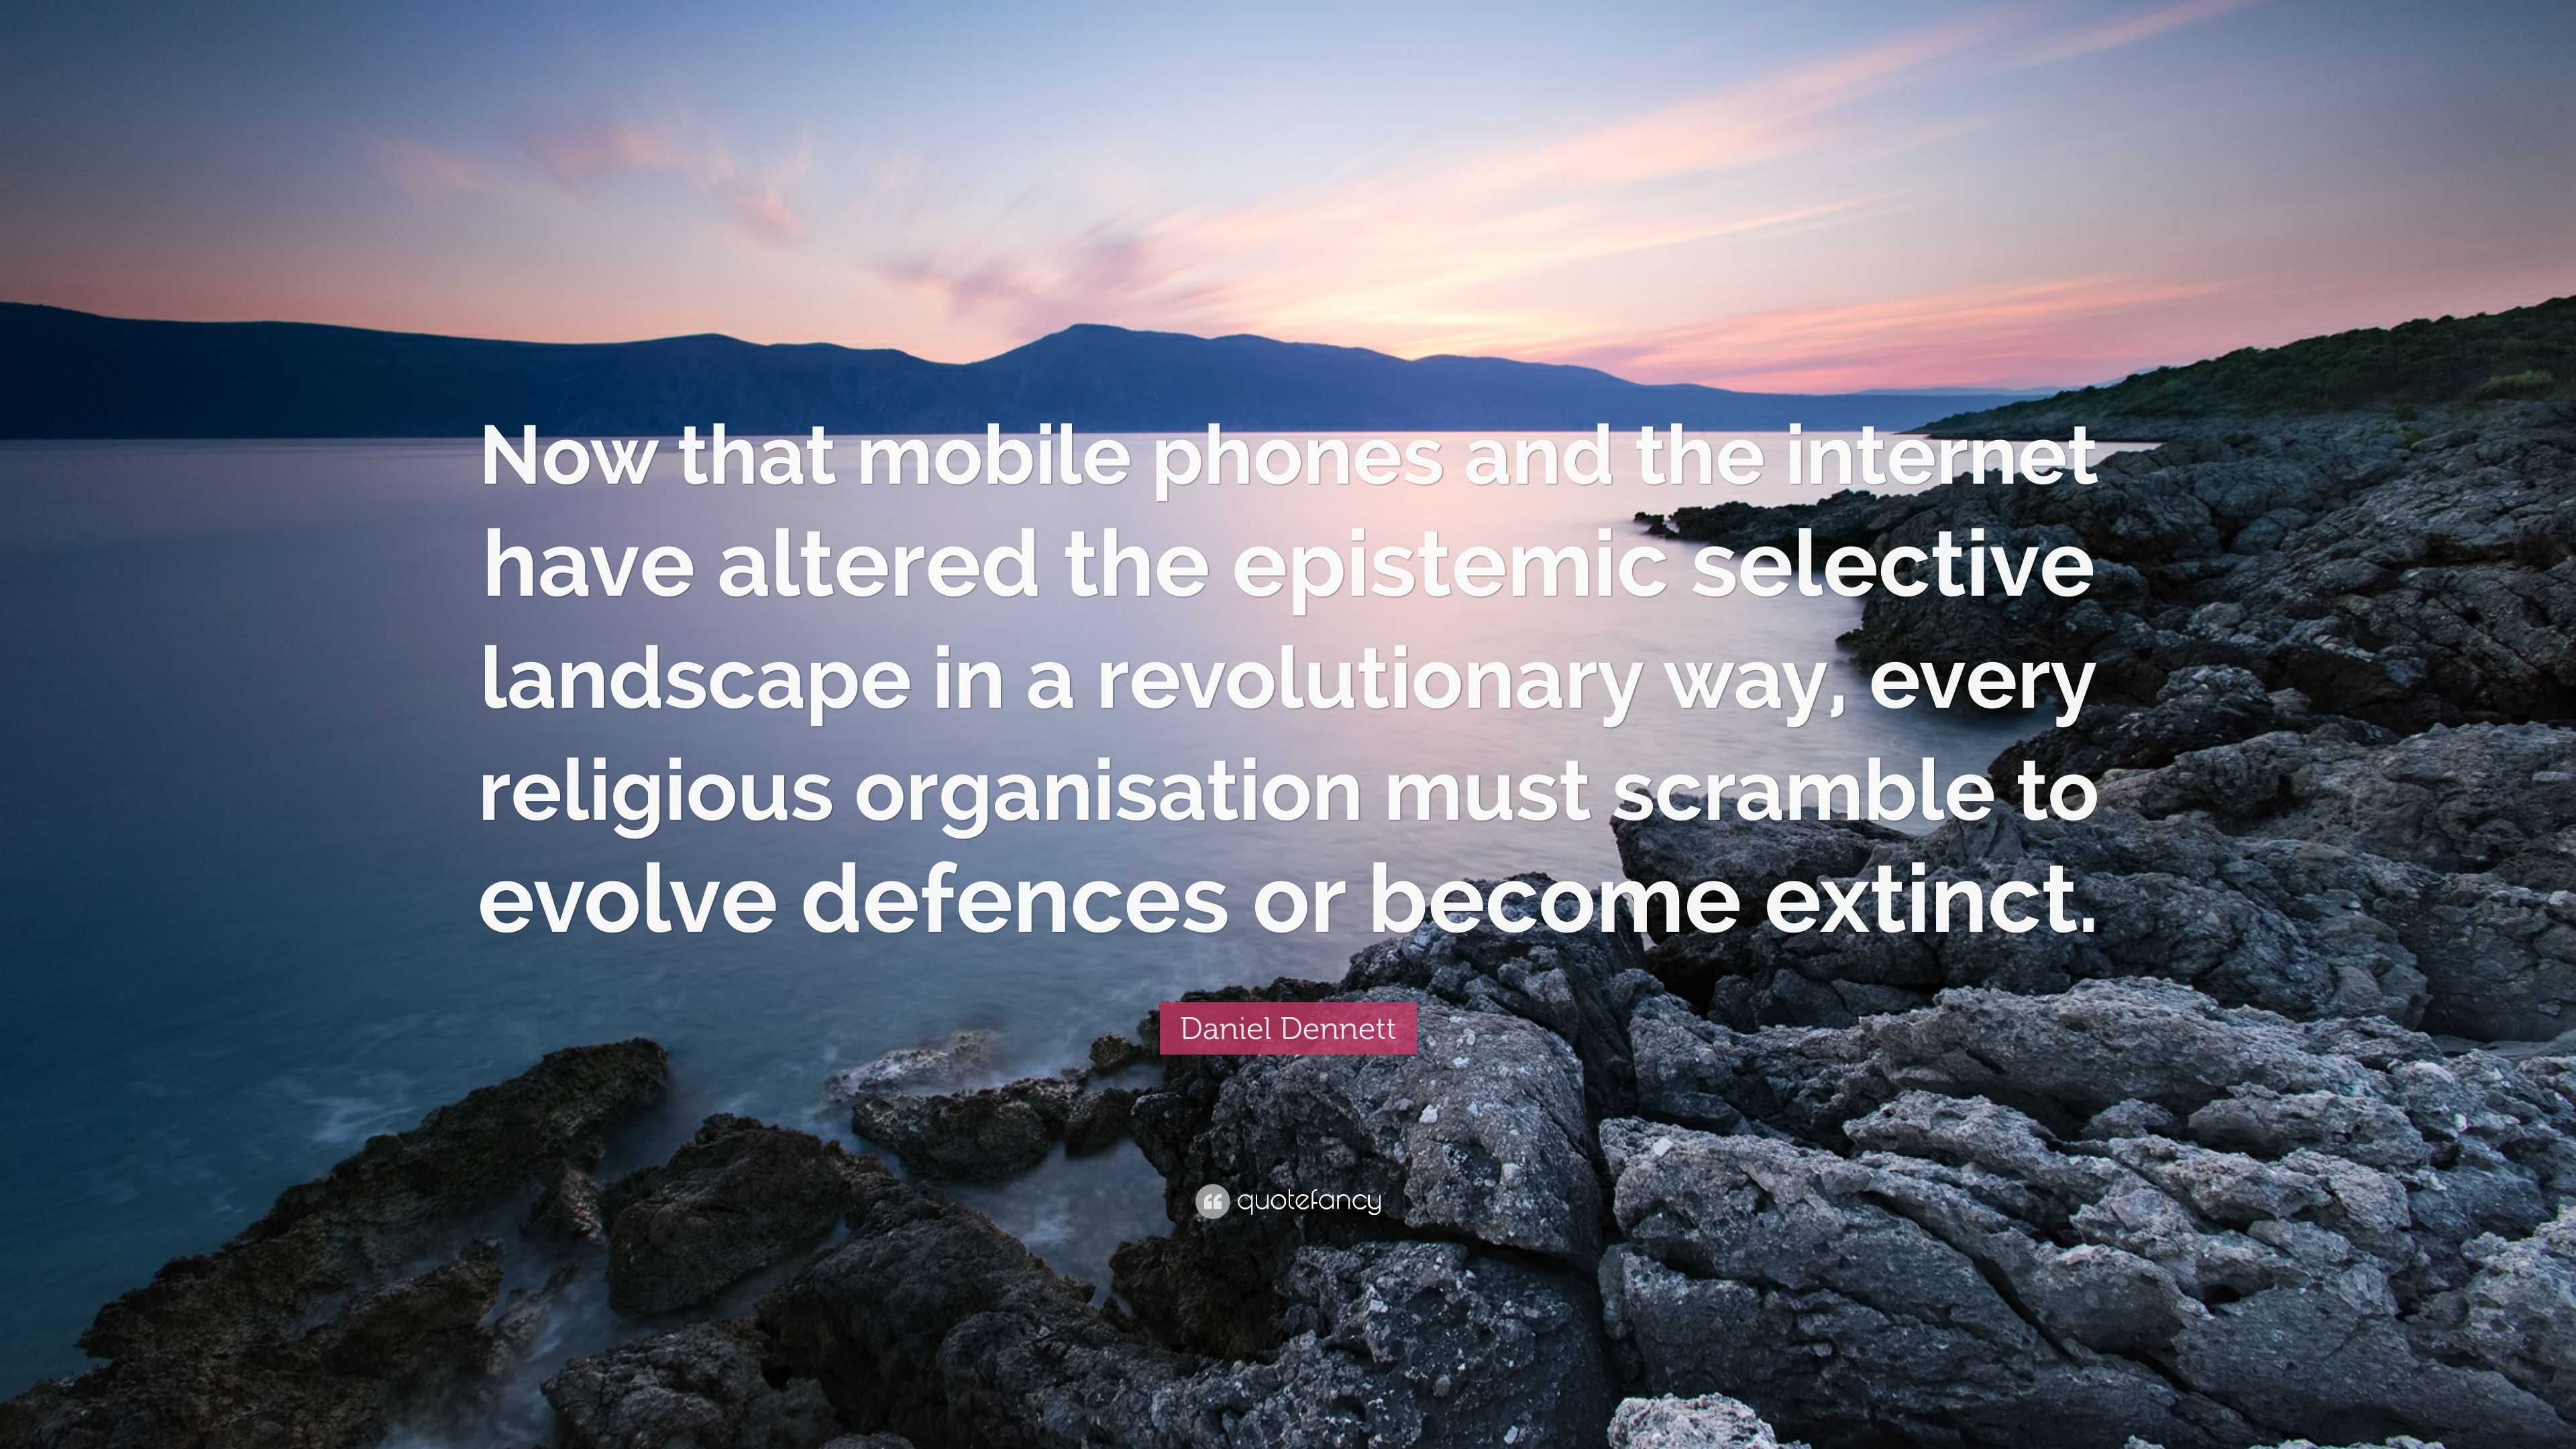 Daniel Dennett Quote: “Now that mobile